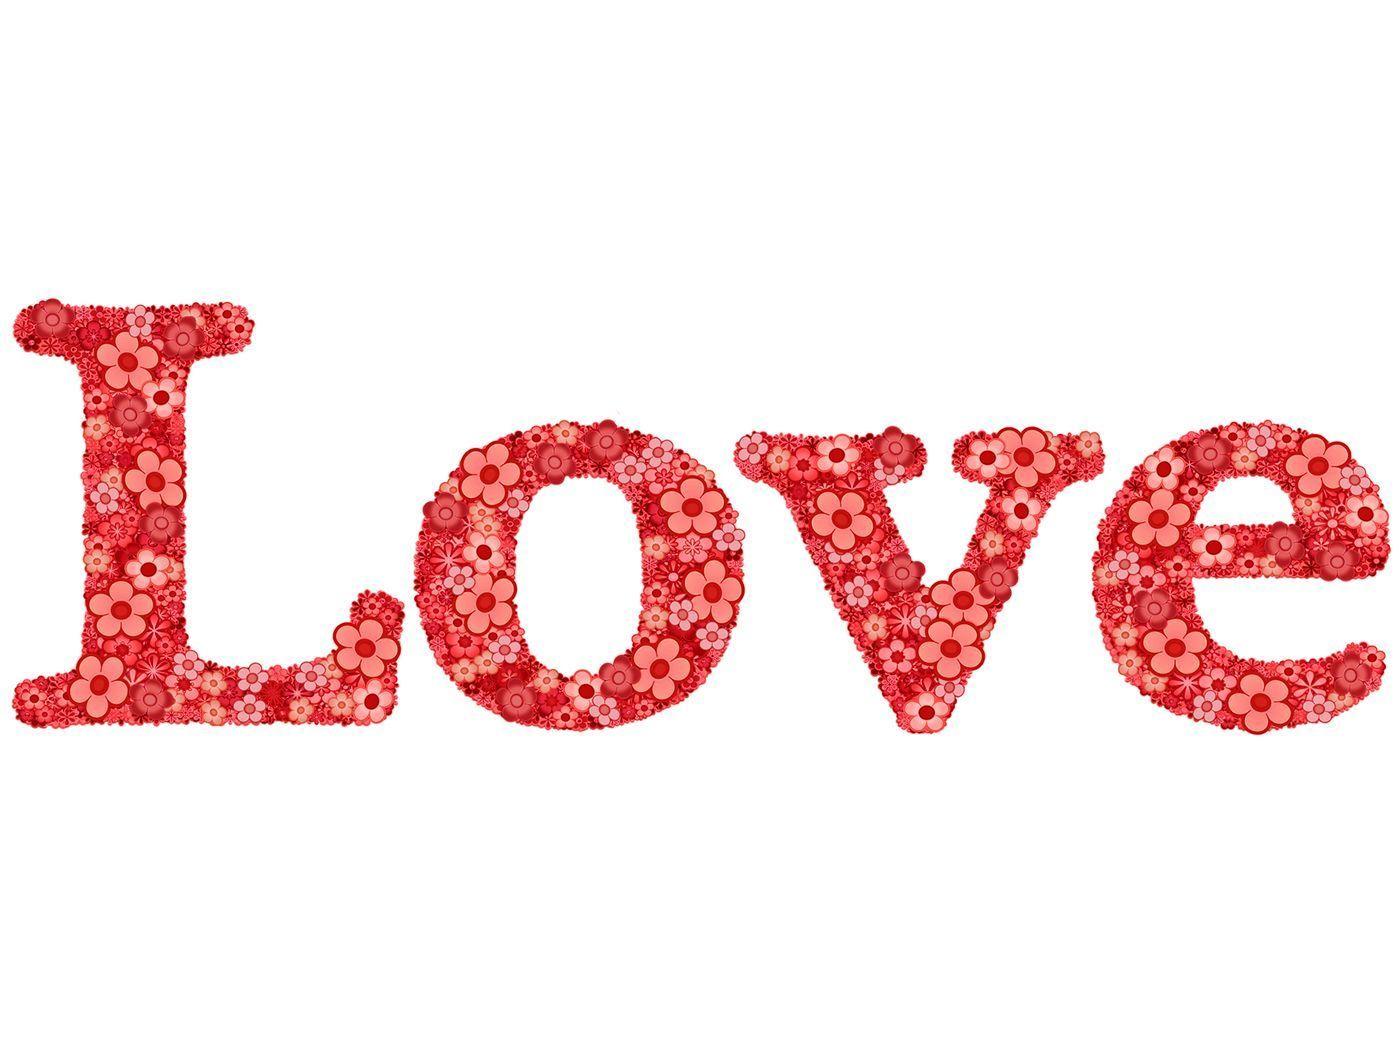 Free Download Love Word HD Wallpaper (6565) Full Size. WallpaperMine